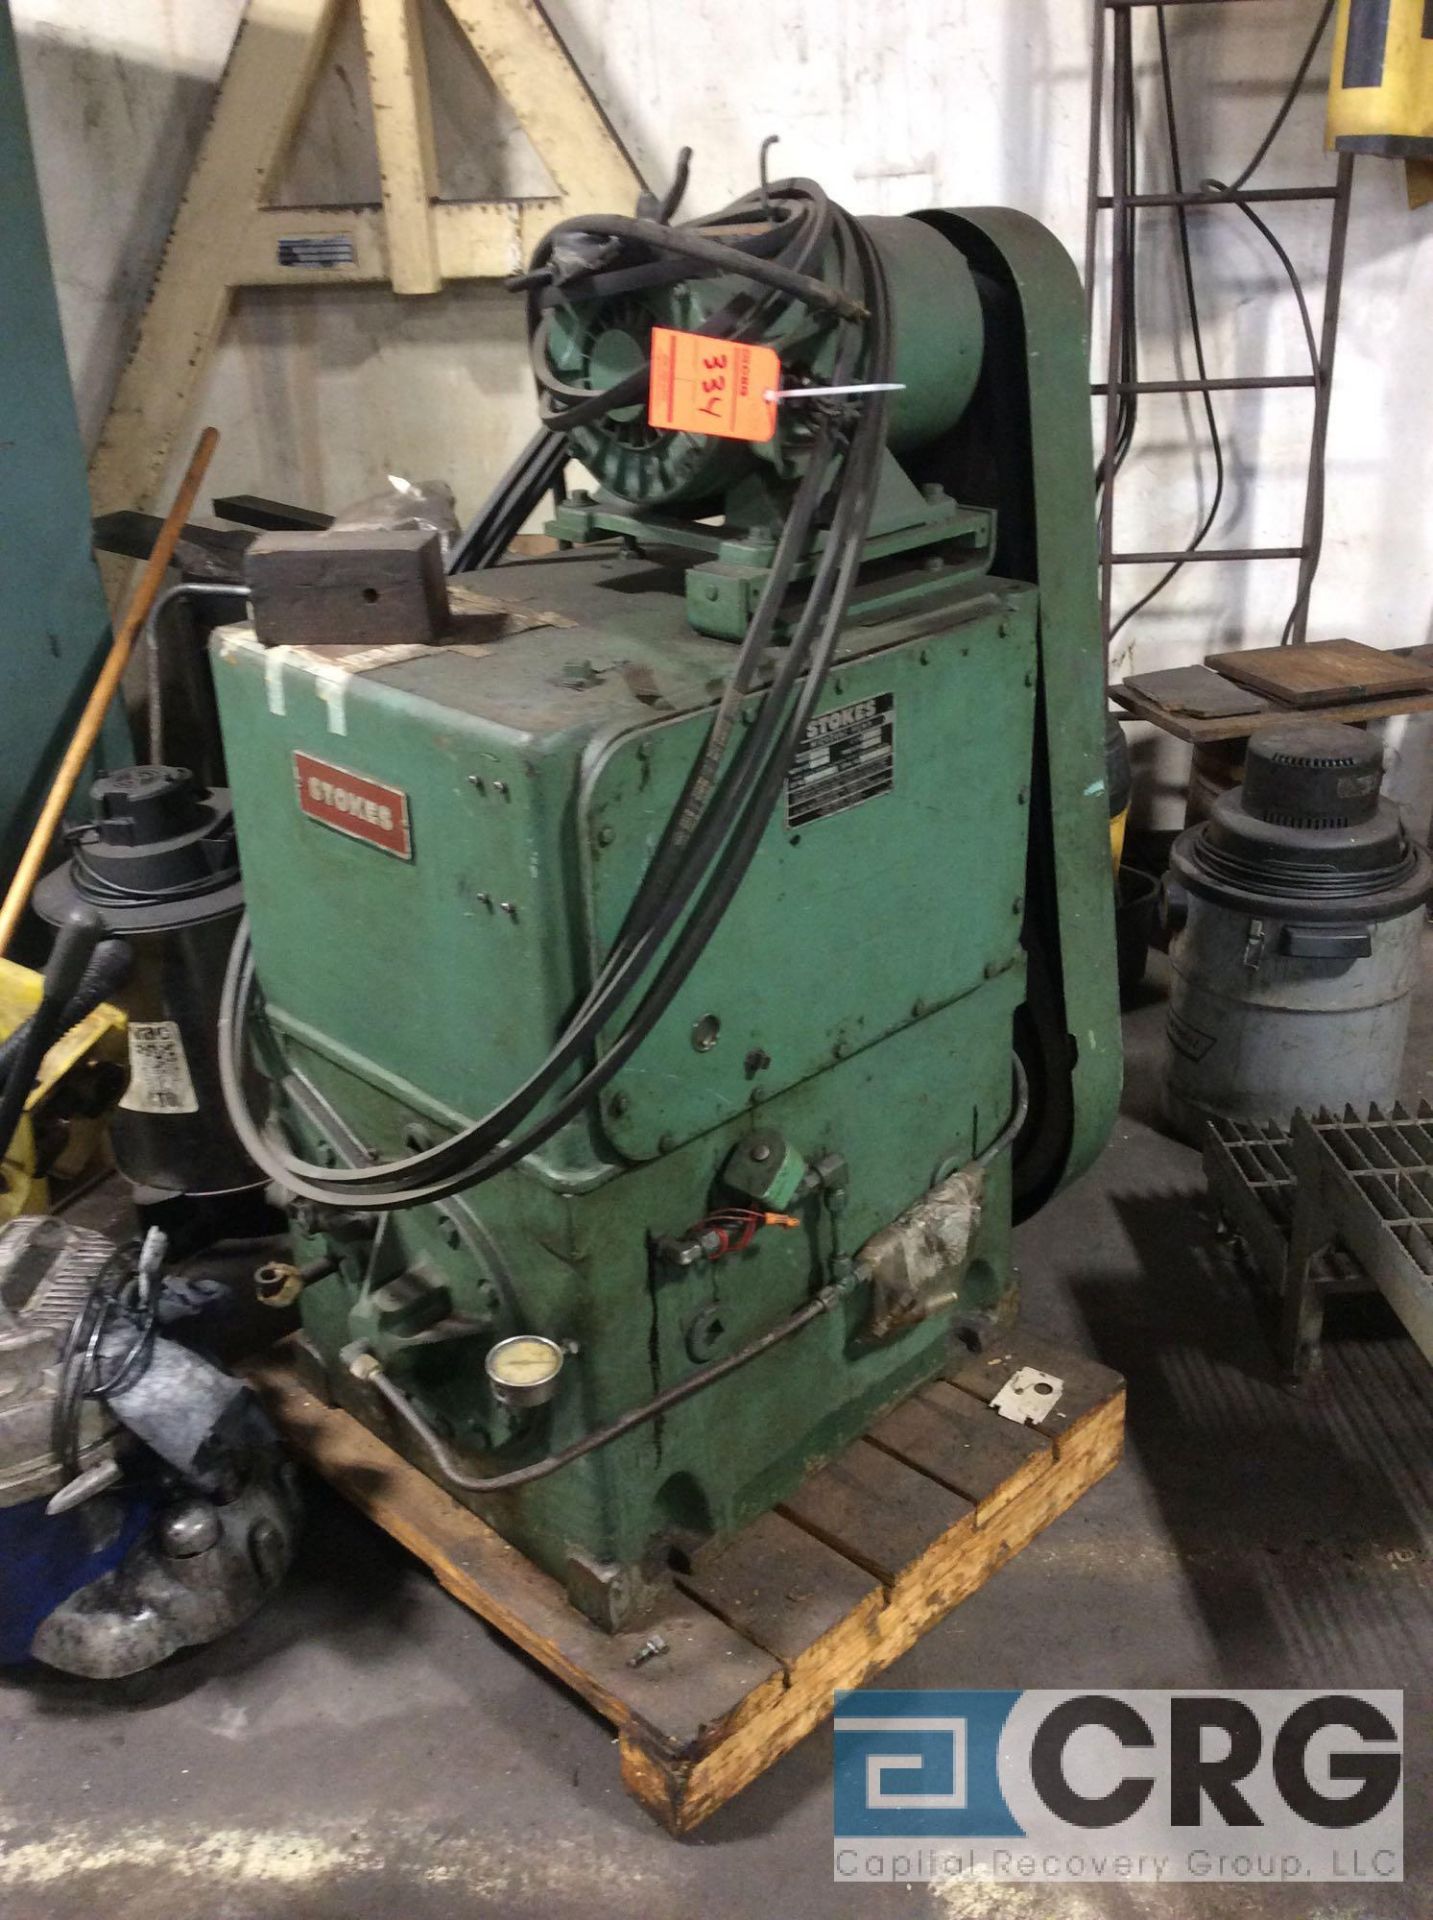 Stokes mcrovac pump, mn 412H-10, 10 hp motor, 300 CFM